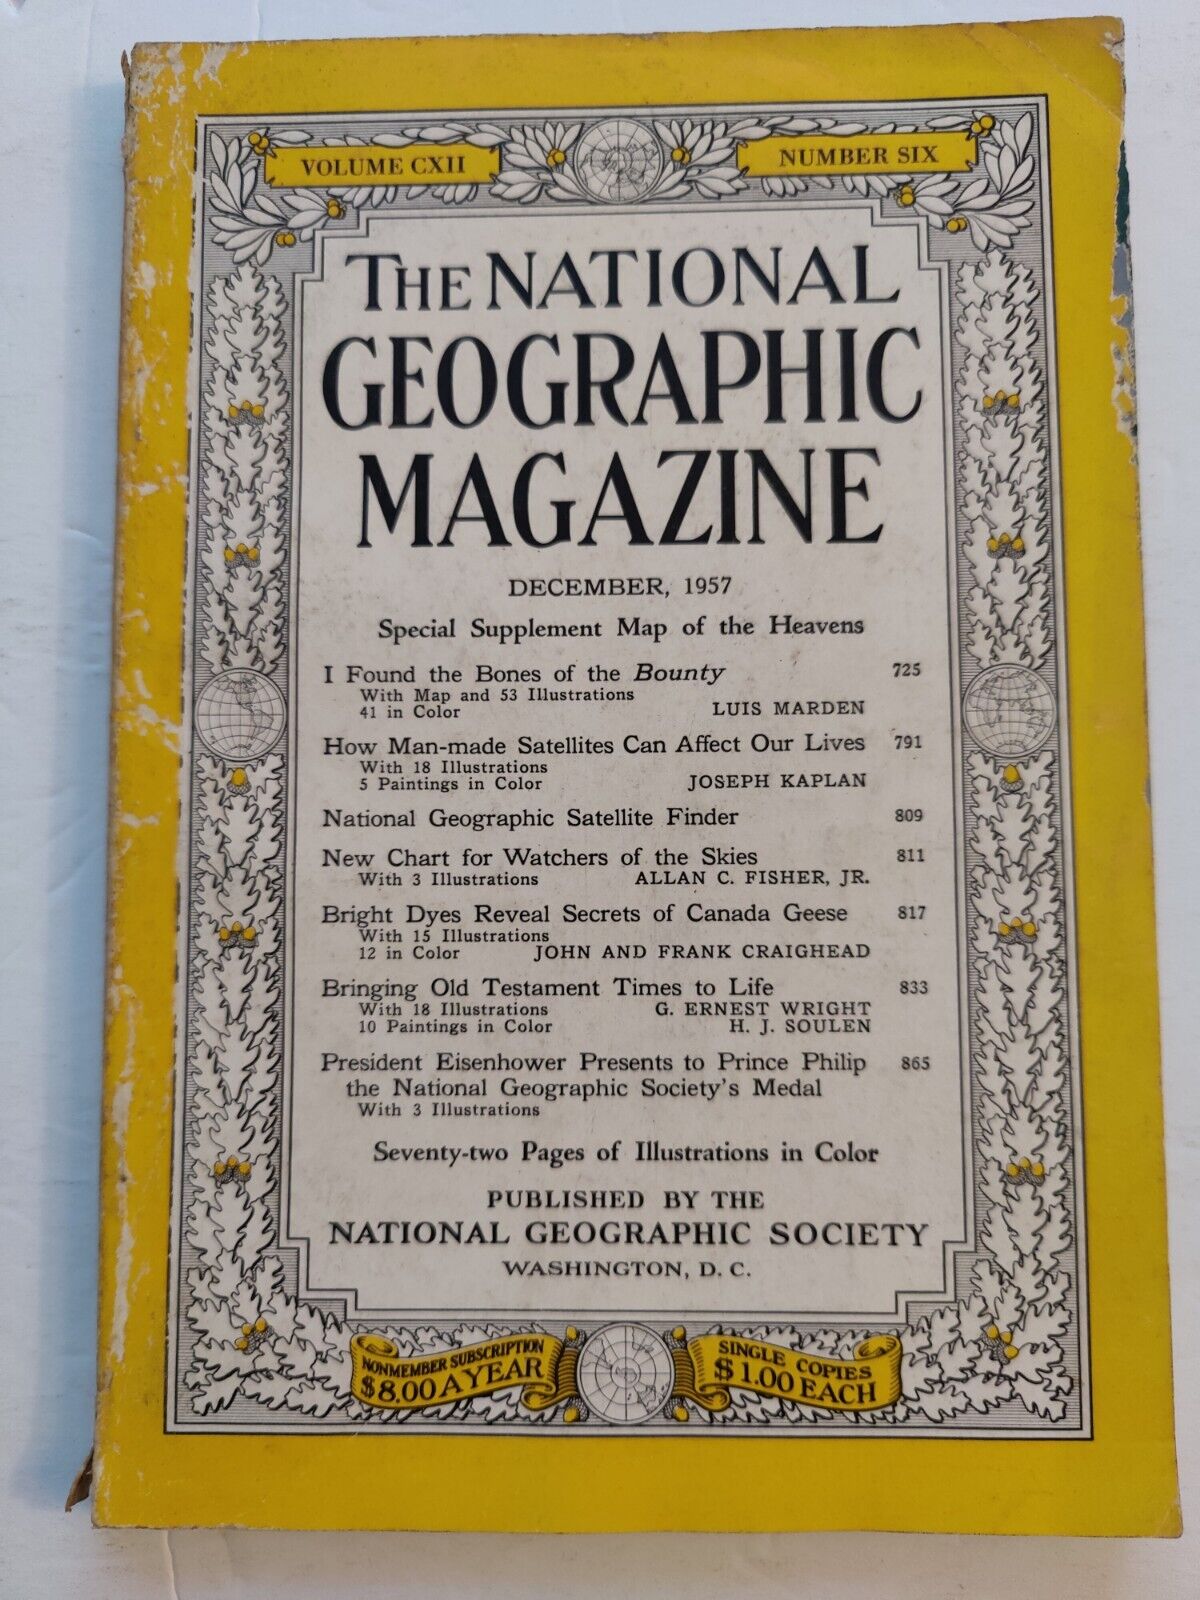 December 1957 National Geographic Magazine Vol. 112 No. 6